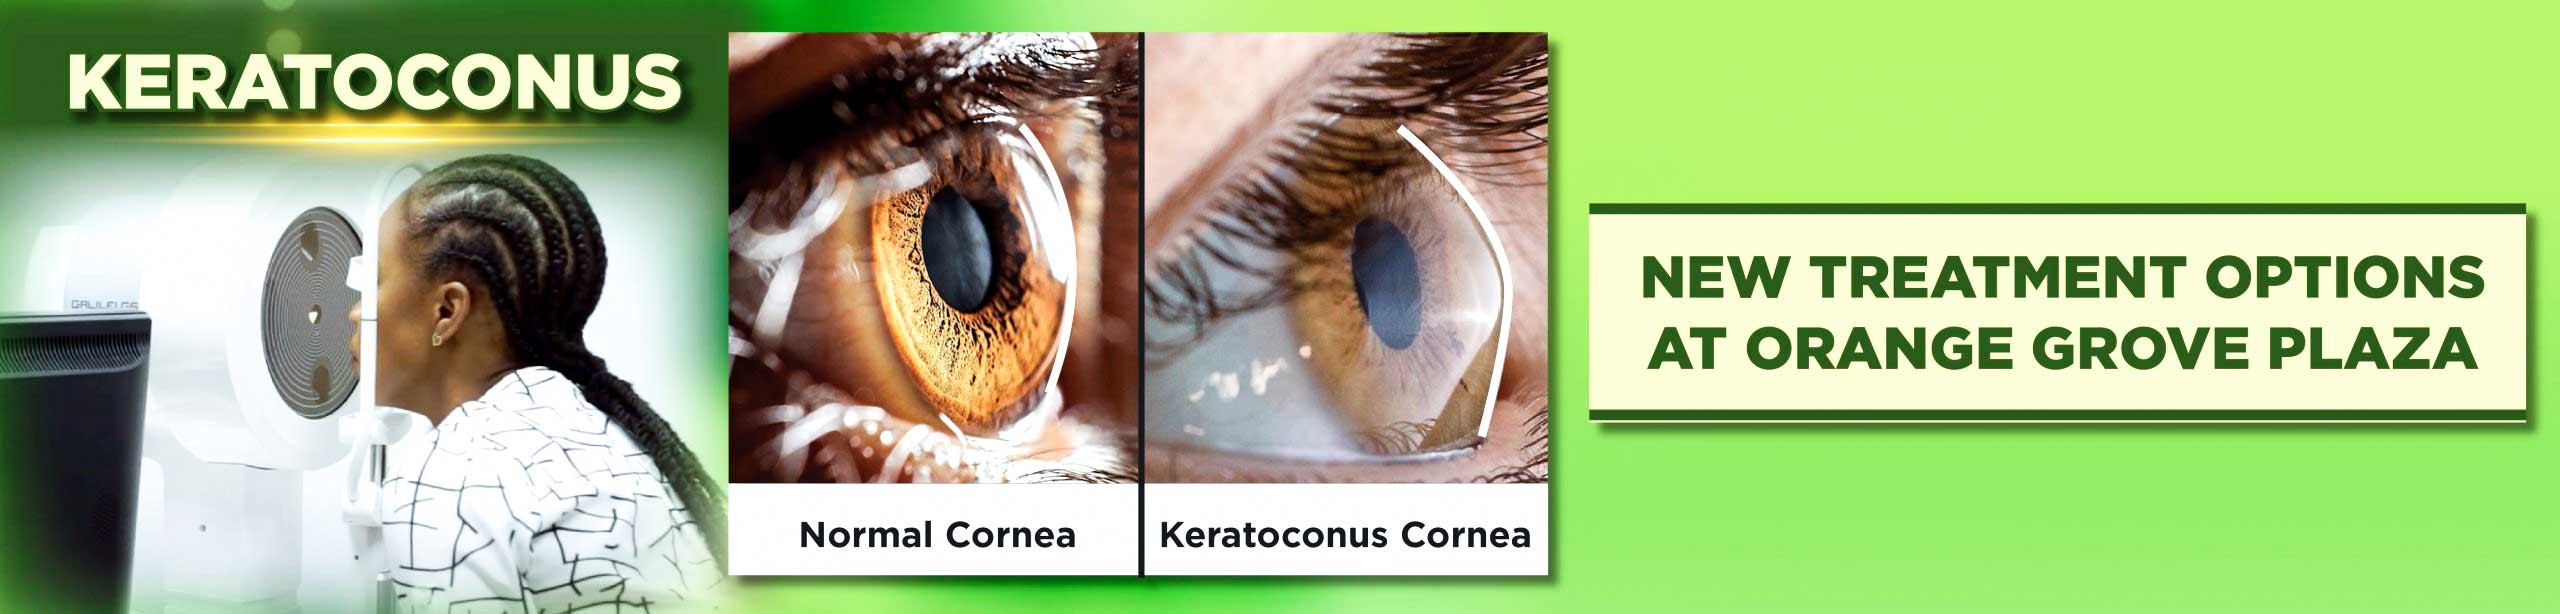 VIsion Express Saint Lucia Contact Lens for Keratoconus